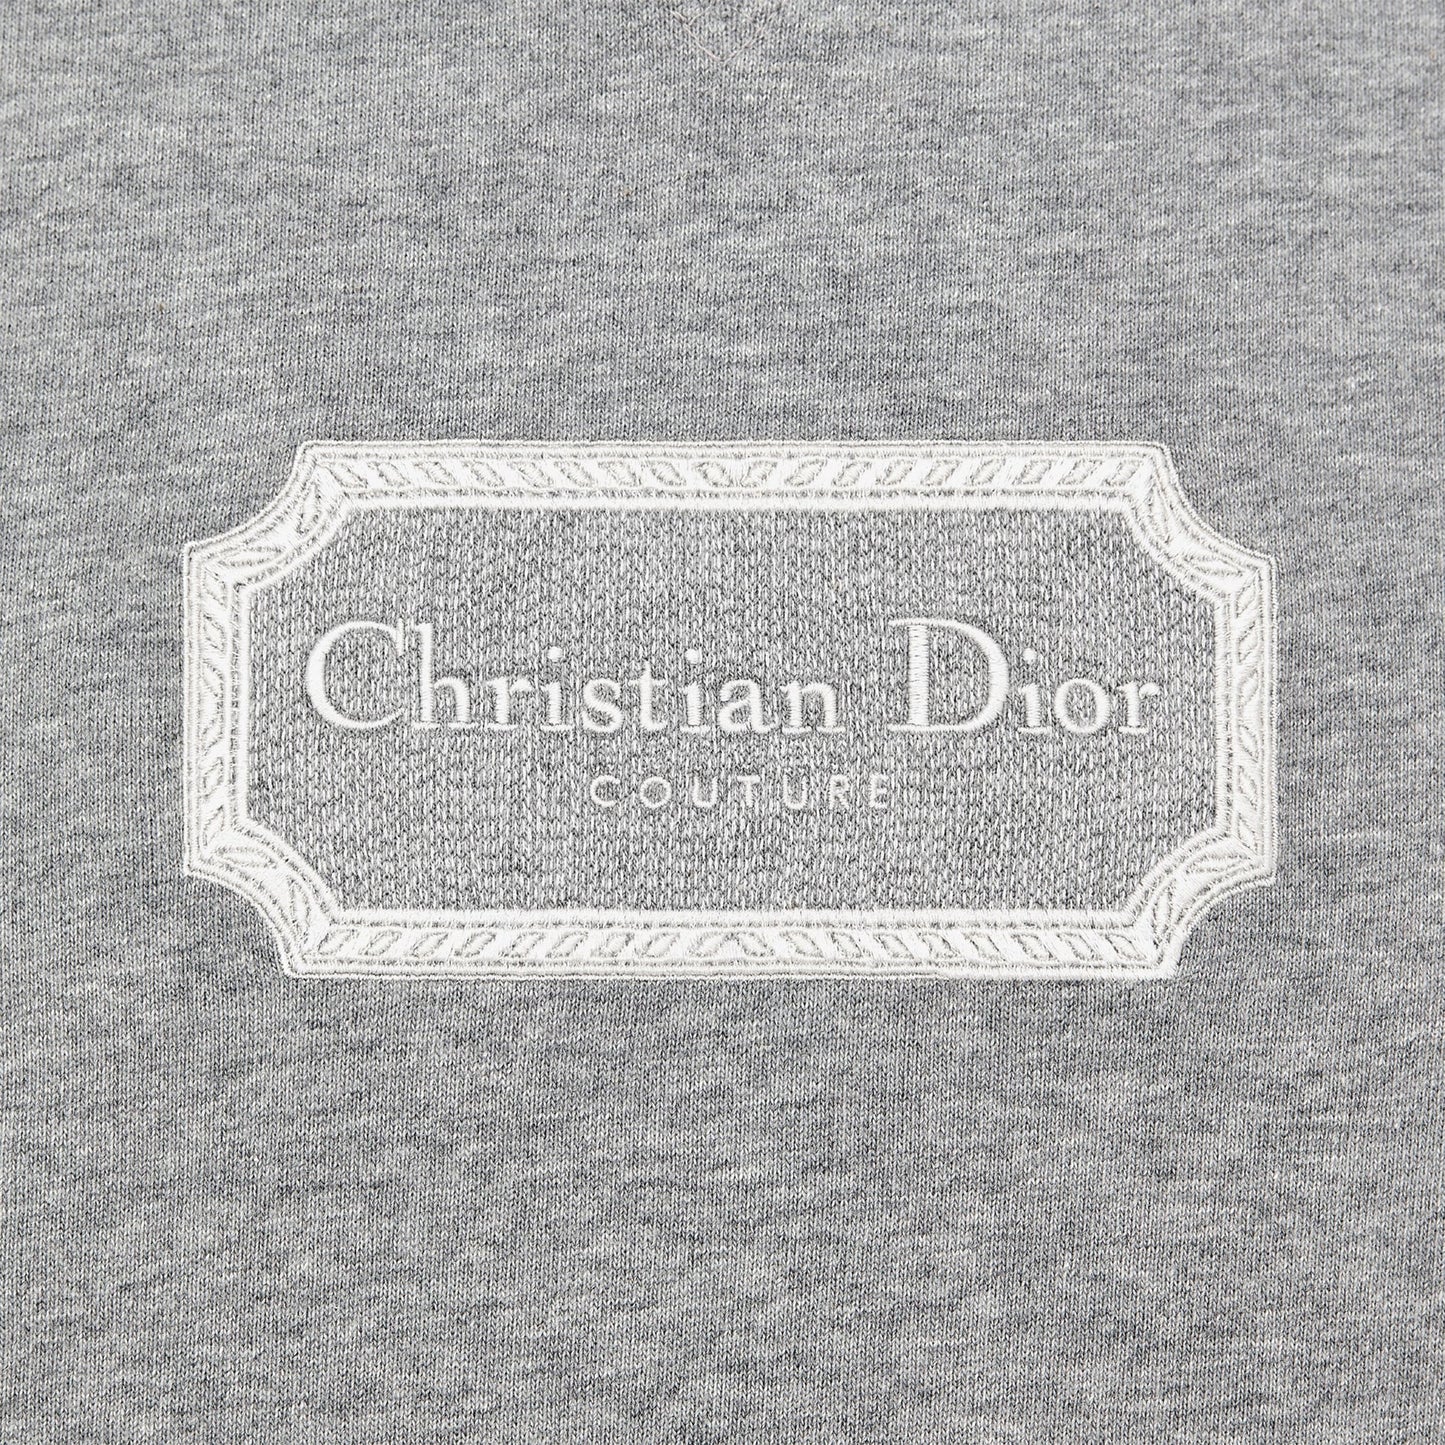 Camiseta Christian Dior